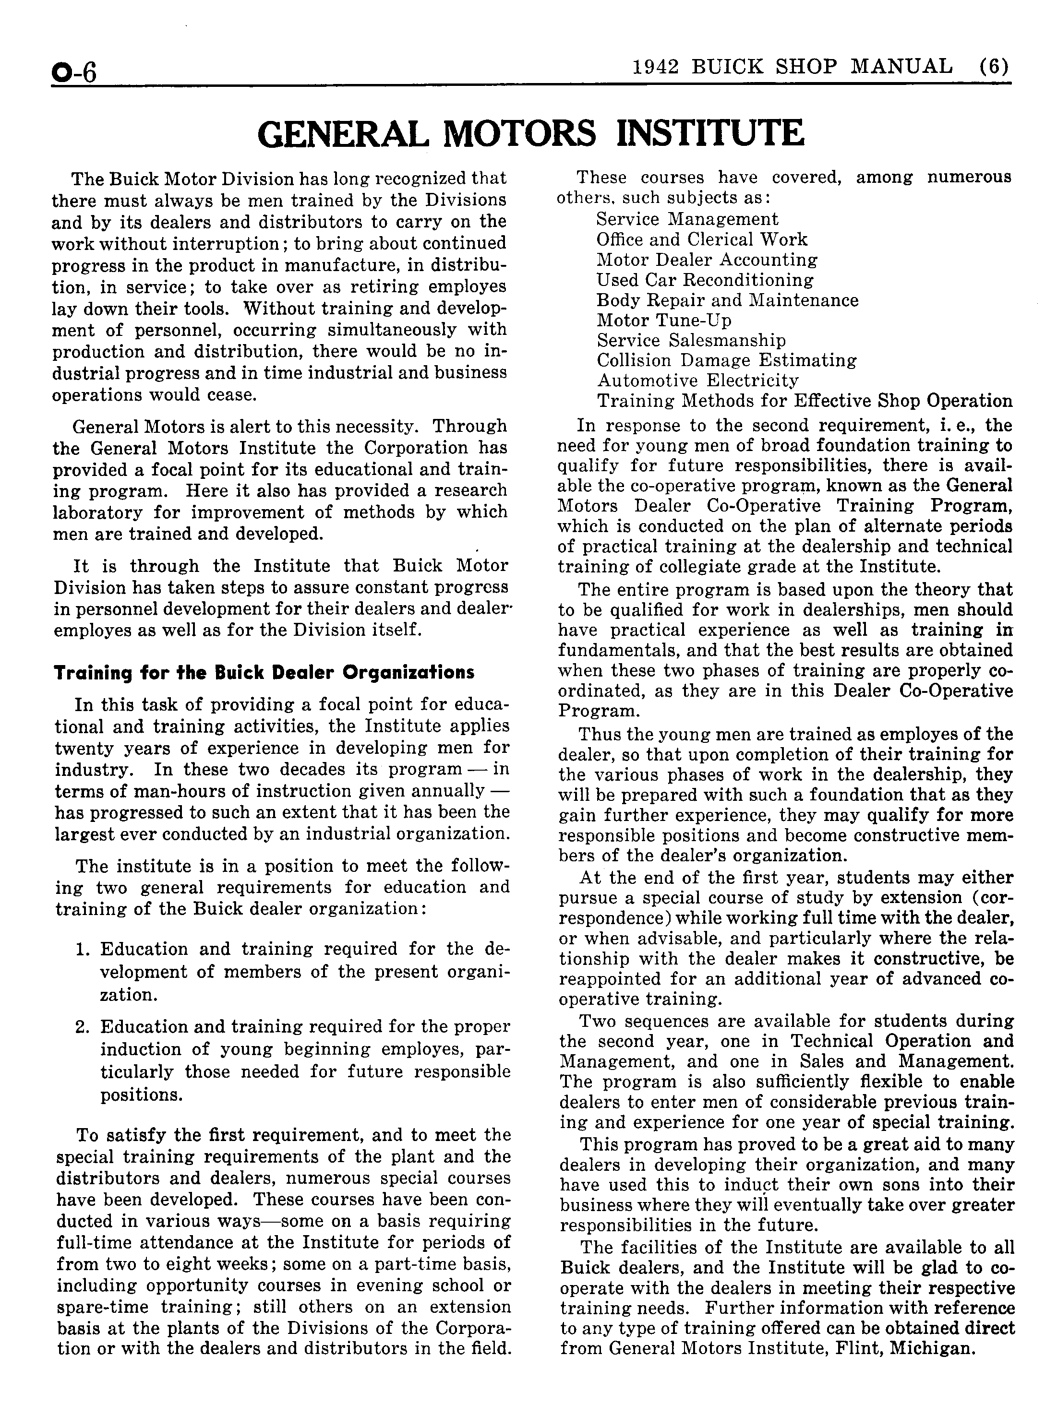 n_01 1942 Buick Shop Manual - Gen Information-008-008.jpg